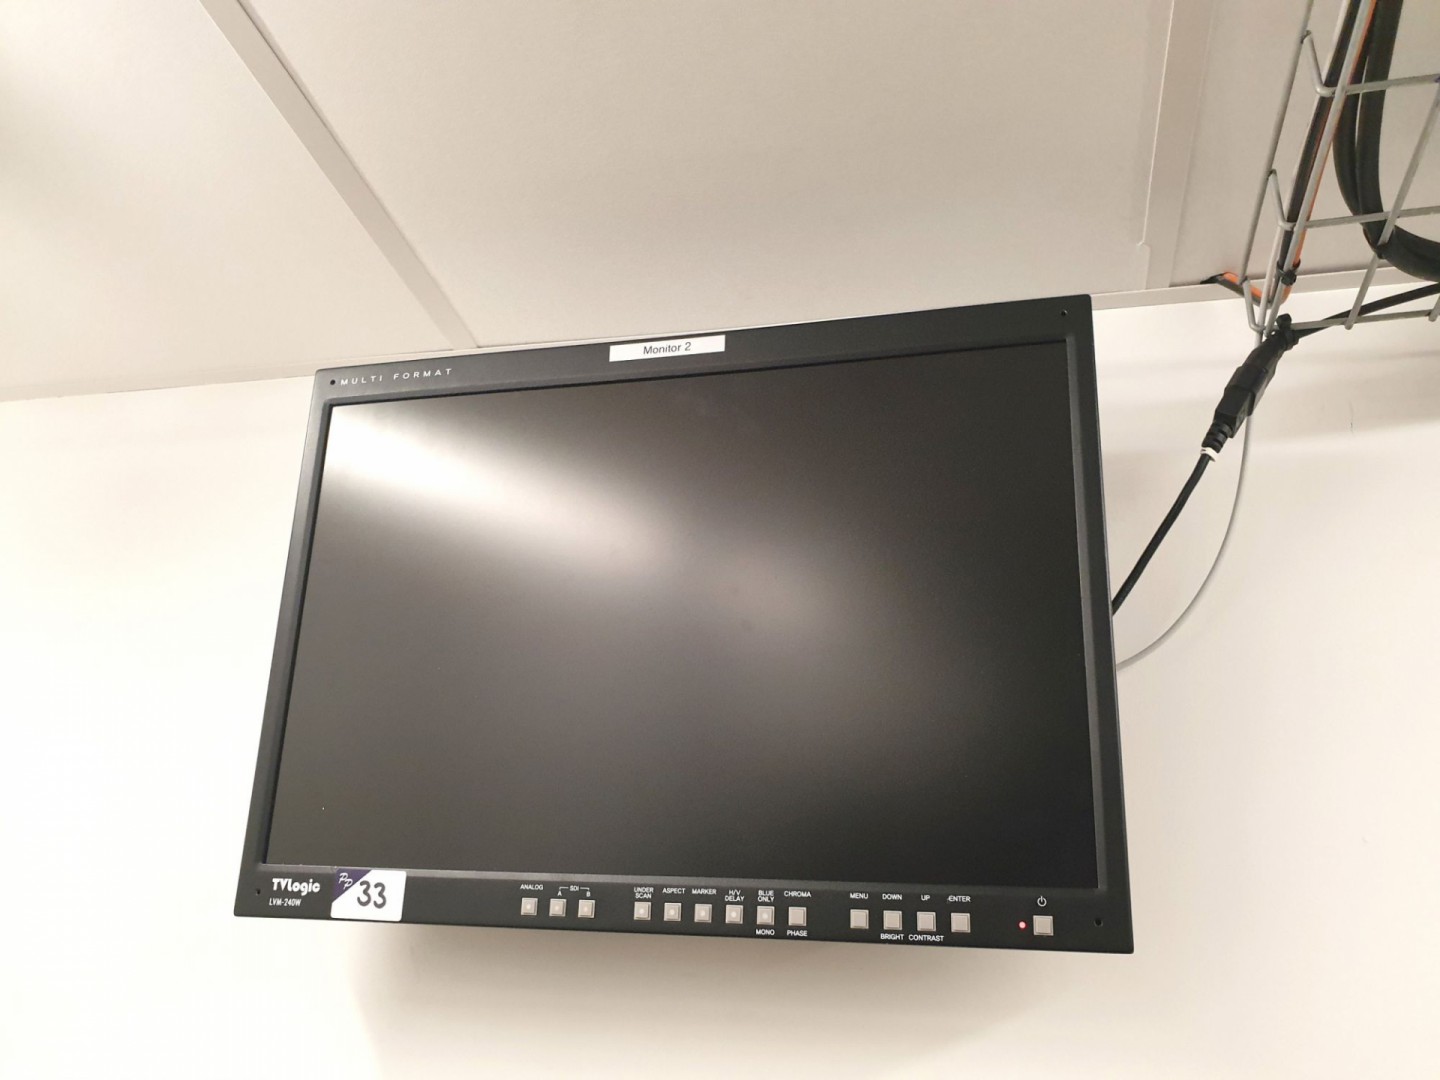 TV Logic LVM-240W multi format LCD monitor on wall...